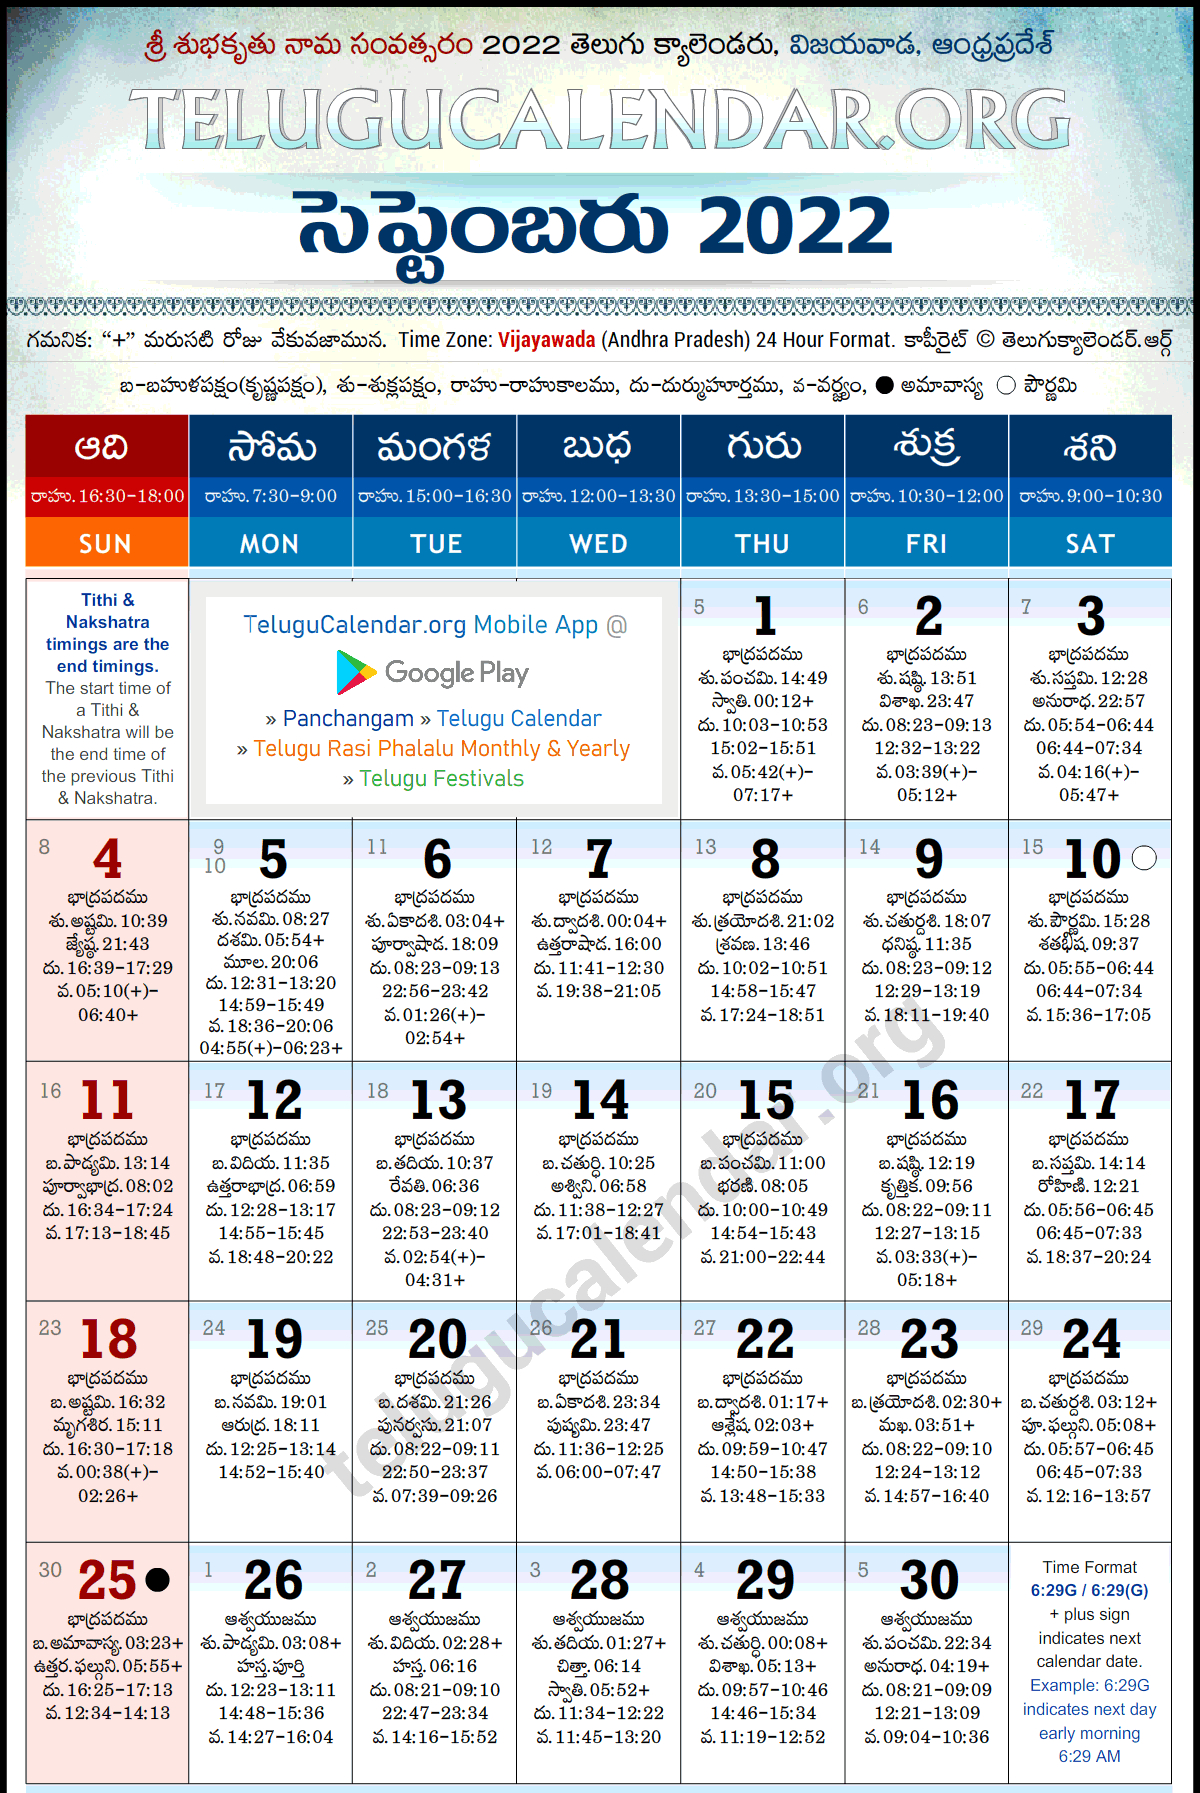 Get Tamil Calendar 2022 September